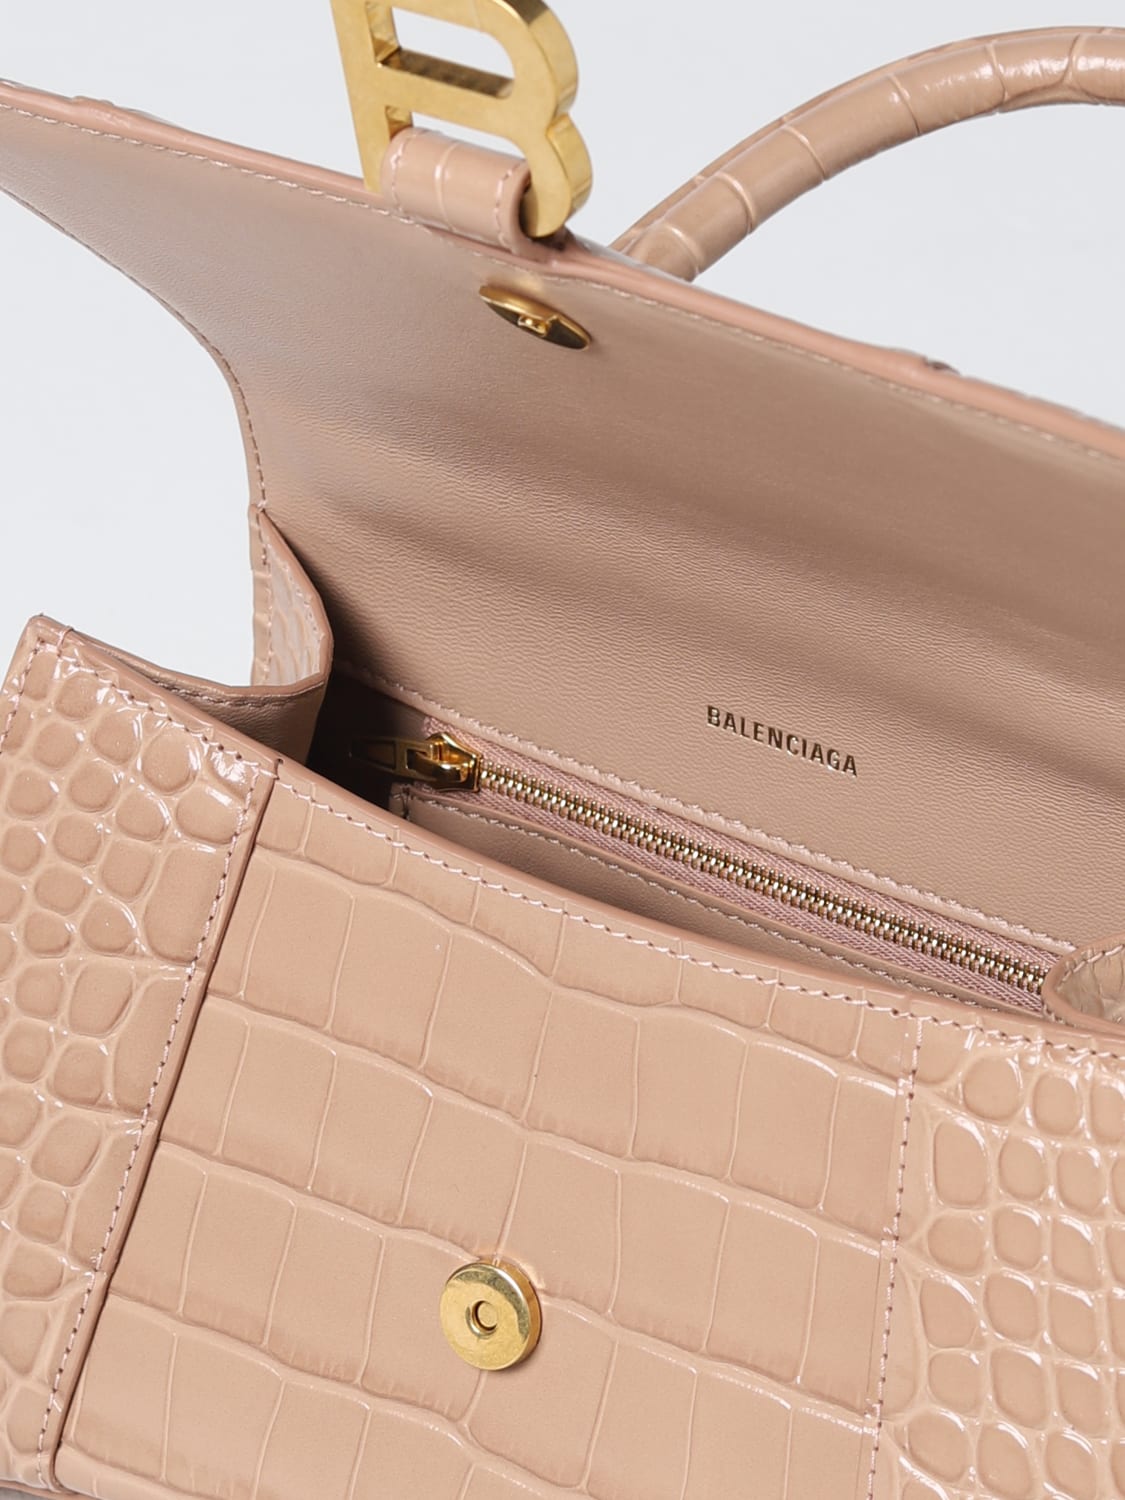 BALENCIAGA: Hourglass bag in leather - Beige  Balenciaga mini bag  5935461LRGM online at